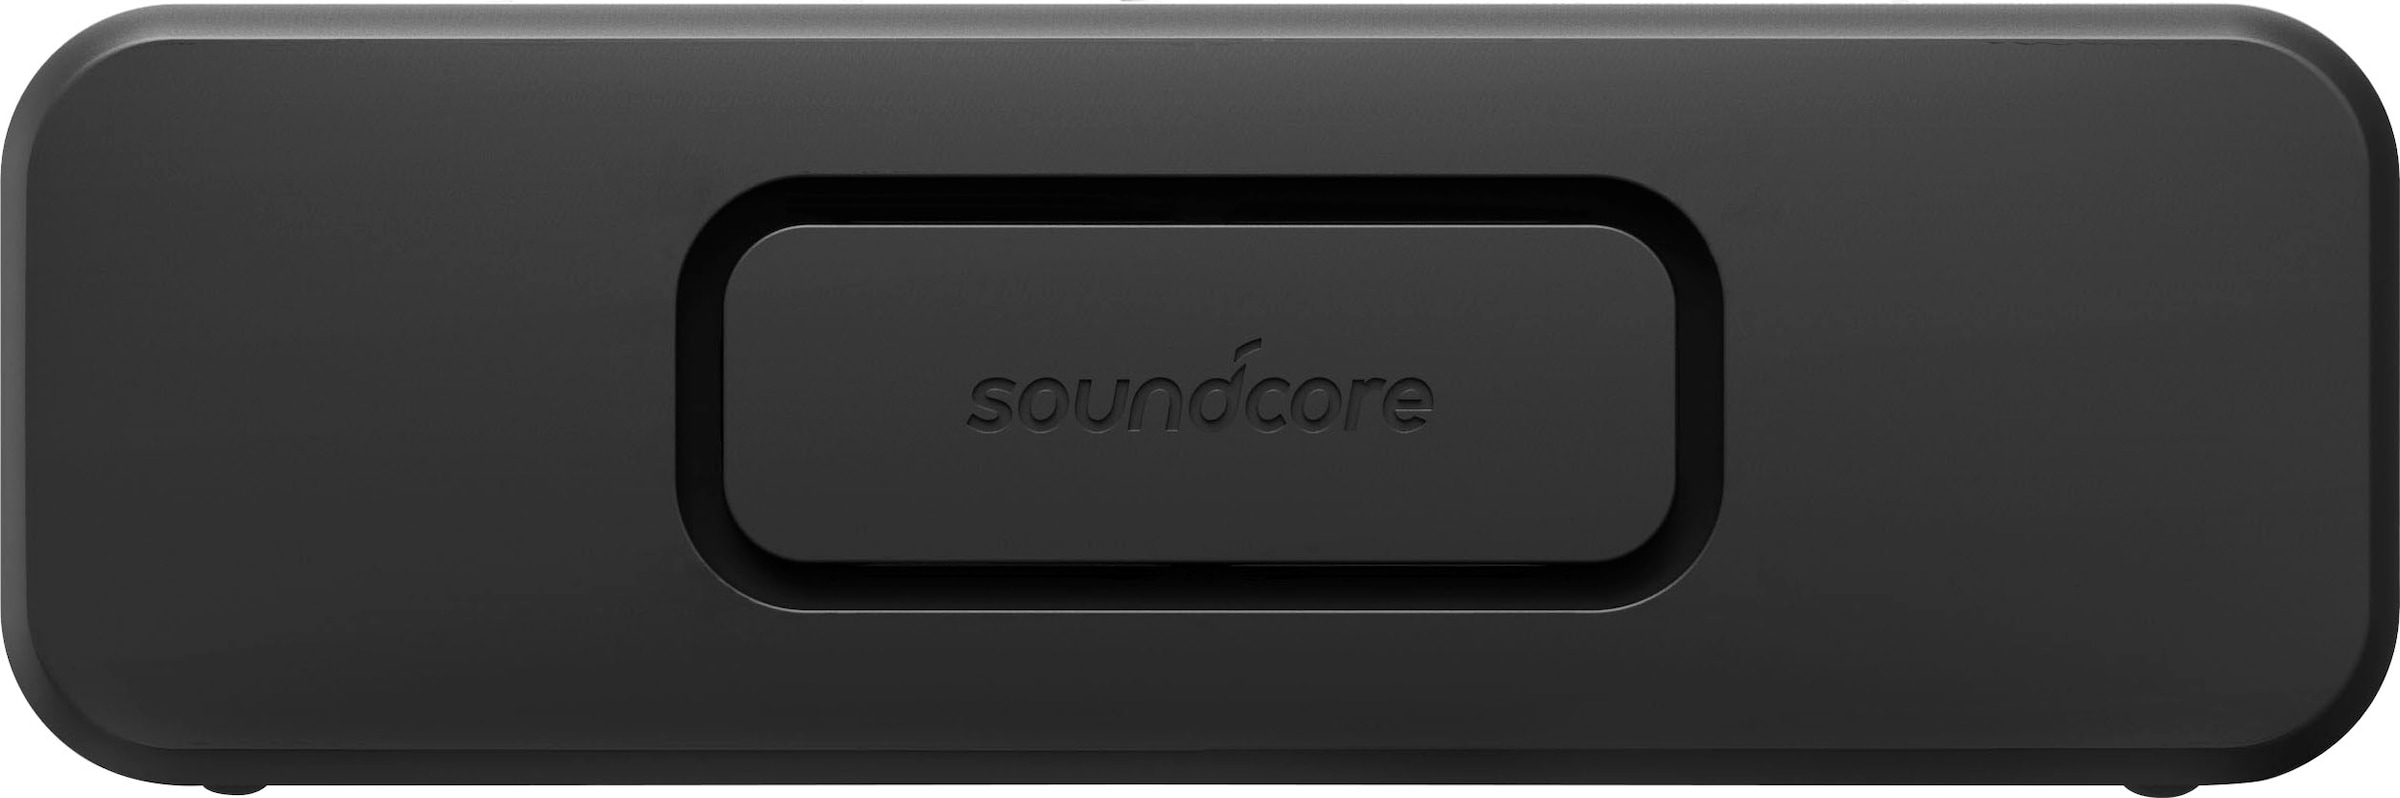 Anker Bluetooth-Lautsprecher »Soundcore Select 2«